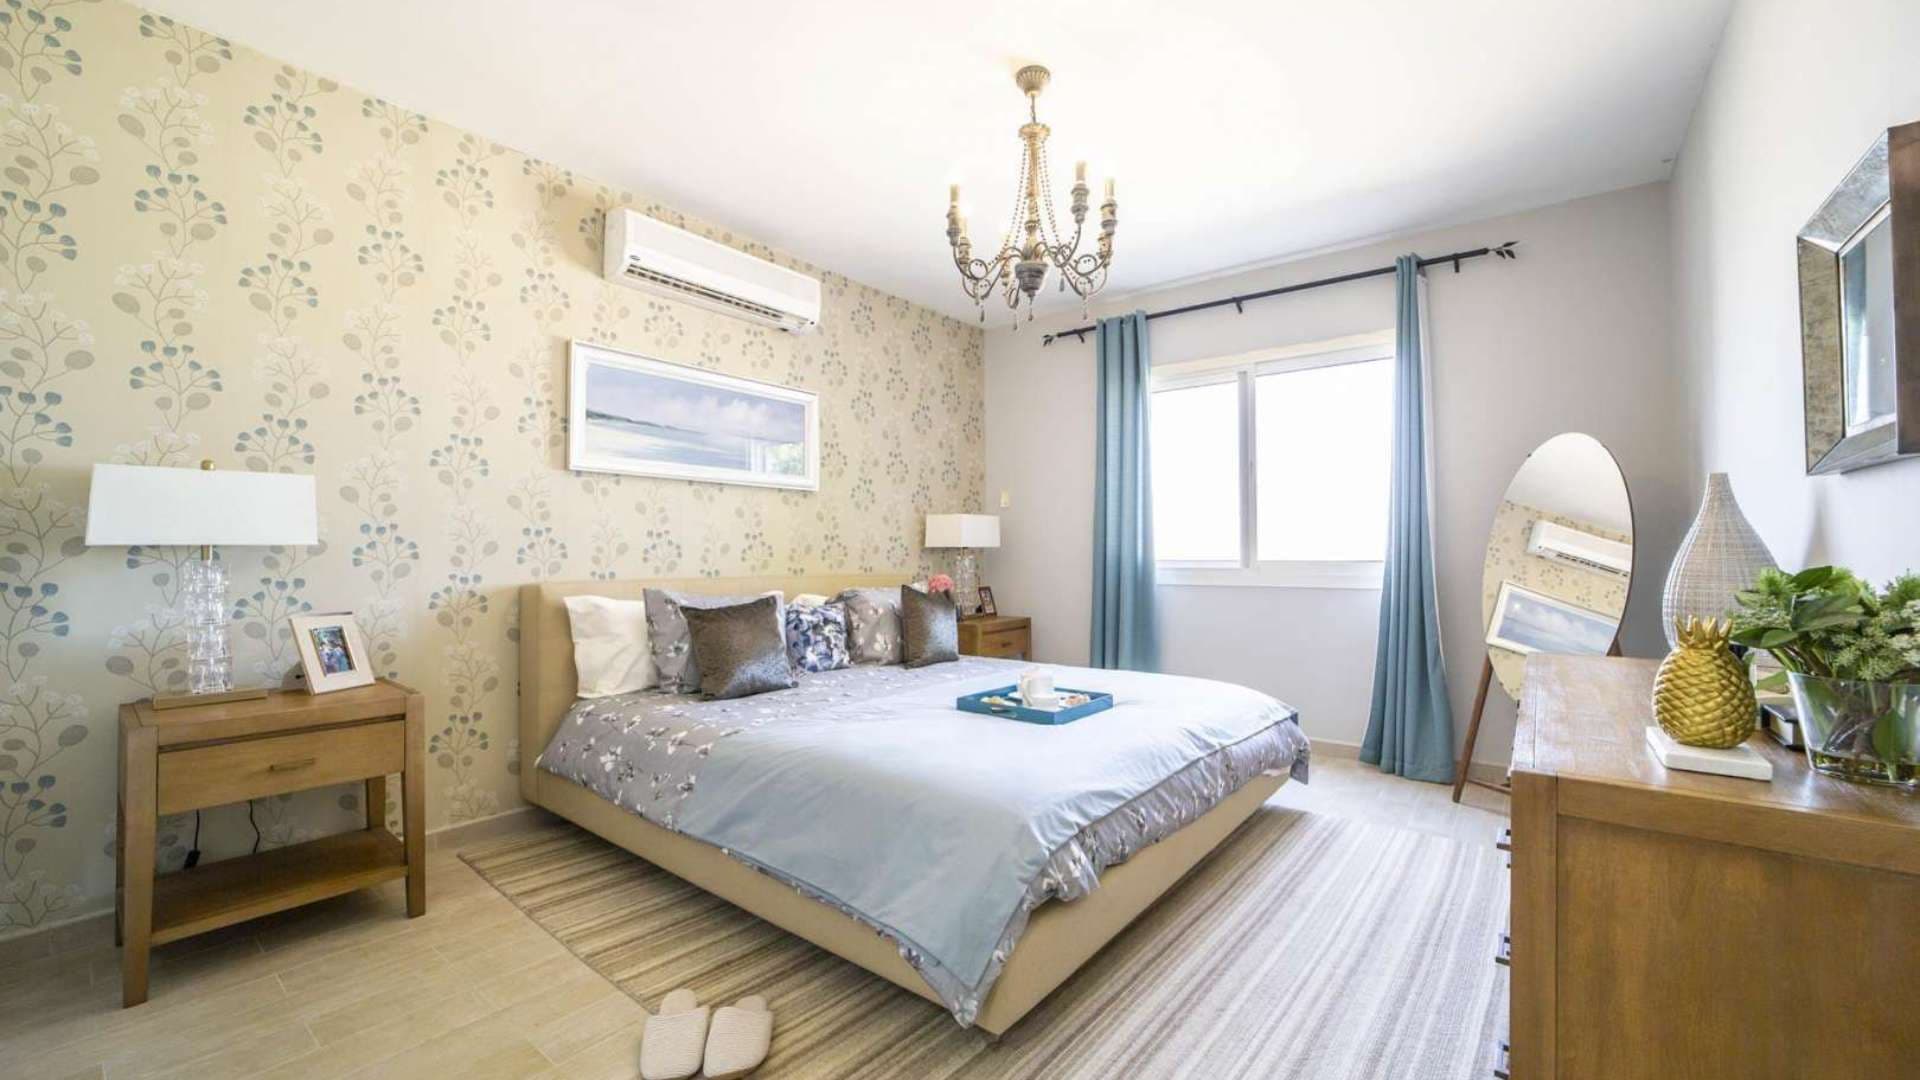 2 Bedroom Apartment For Sale Al Andalus Apartments Lp10926 261091f902f41200.jpeg